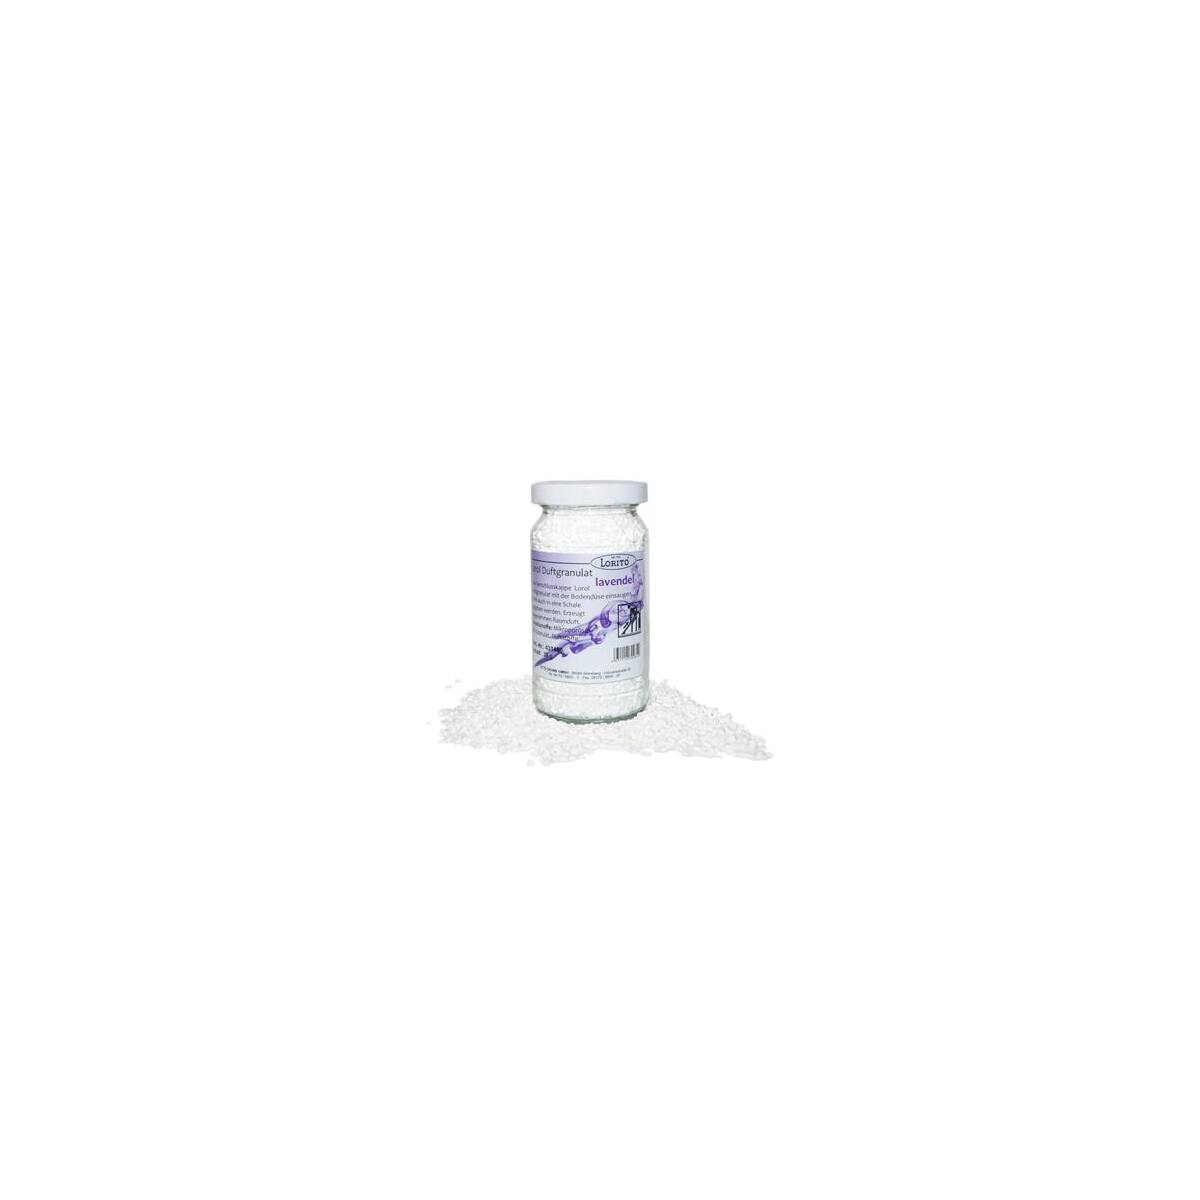 Lorol Duftgranulat Lavendel 38 g - 200 ml Staubsaugerduft Raumduft, 8,01 €